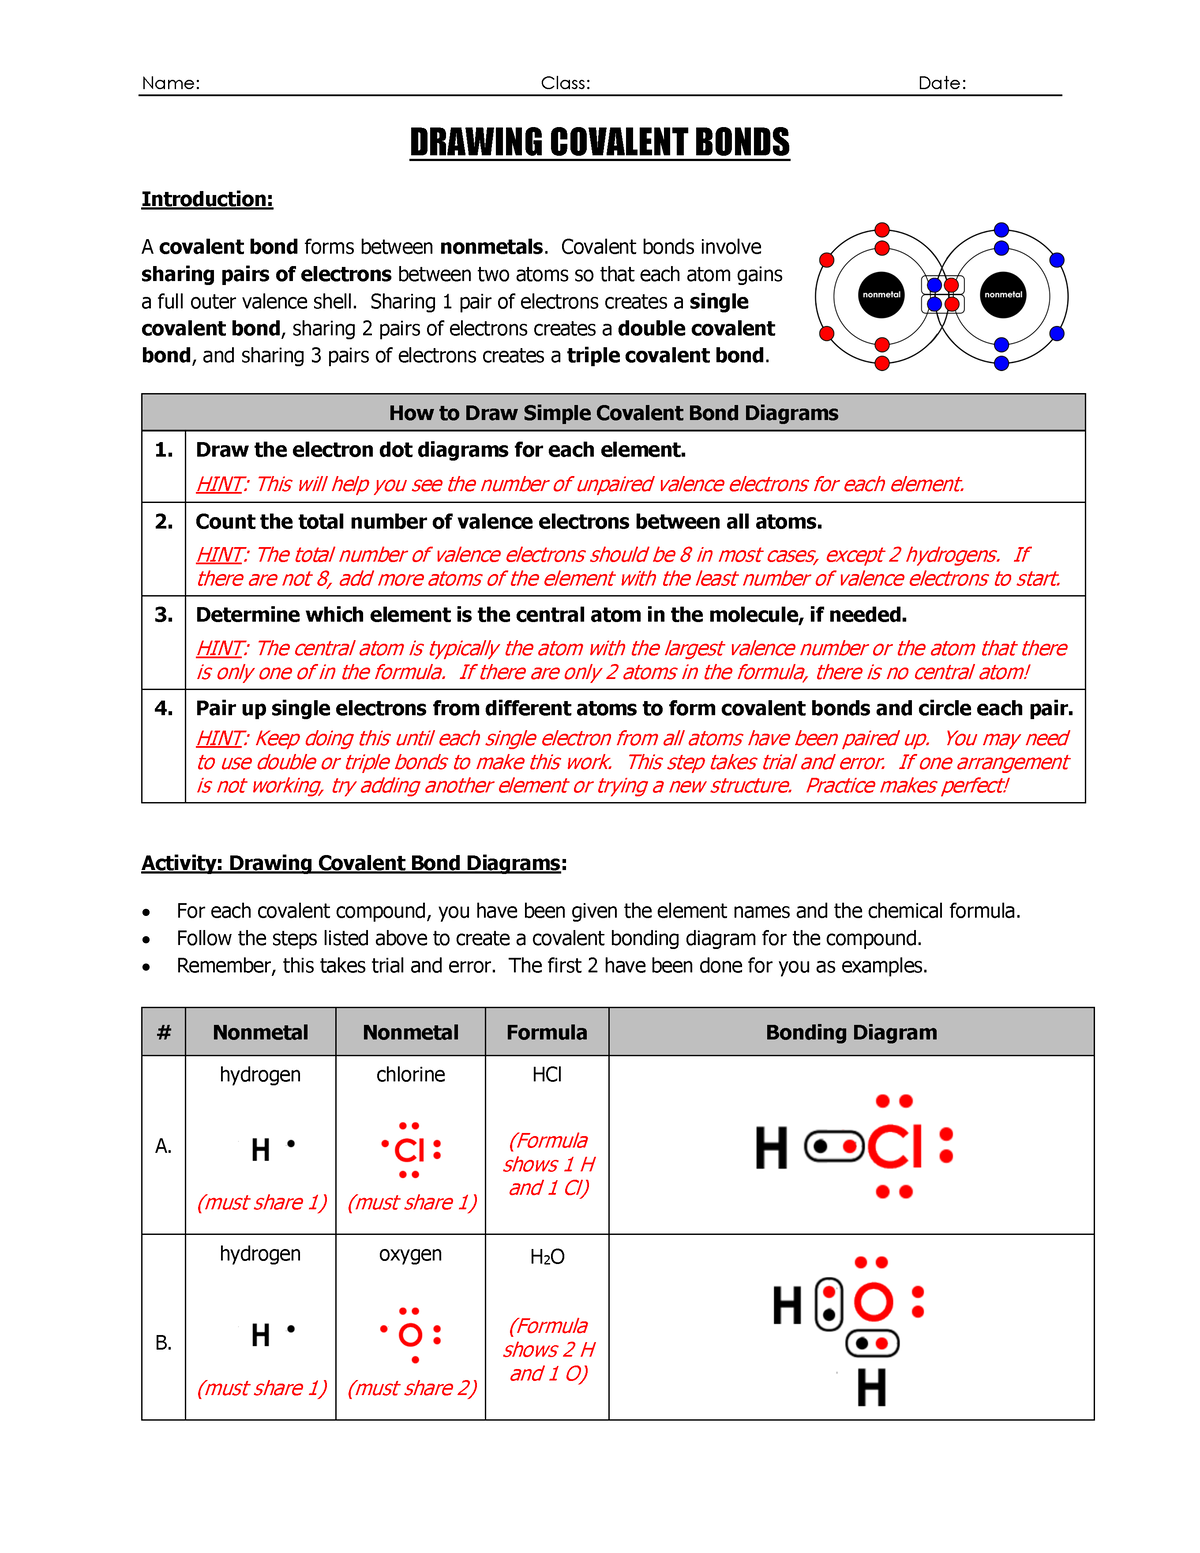 ws-drawing-covalent-bond-diagrams-pdf-name-class-date-drawing-covalent-bonds-introduction